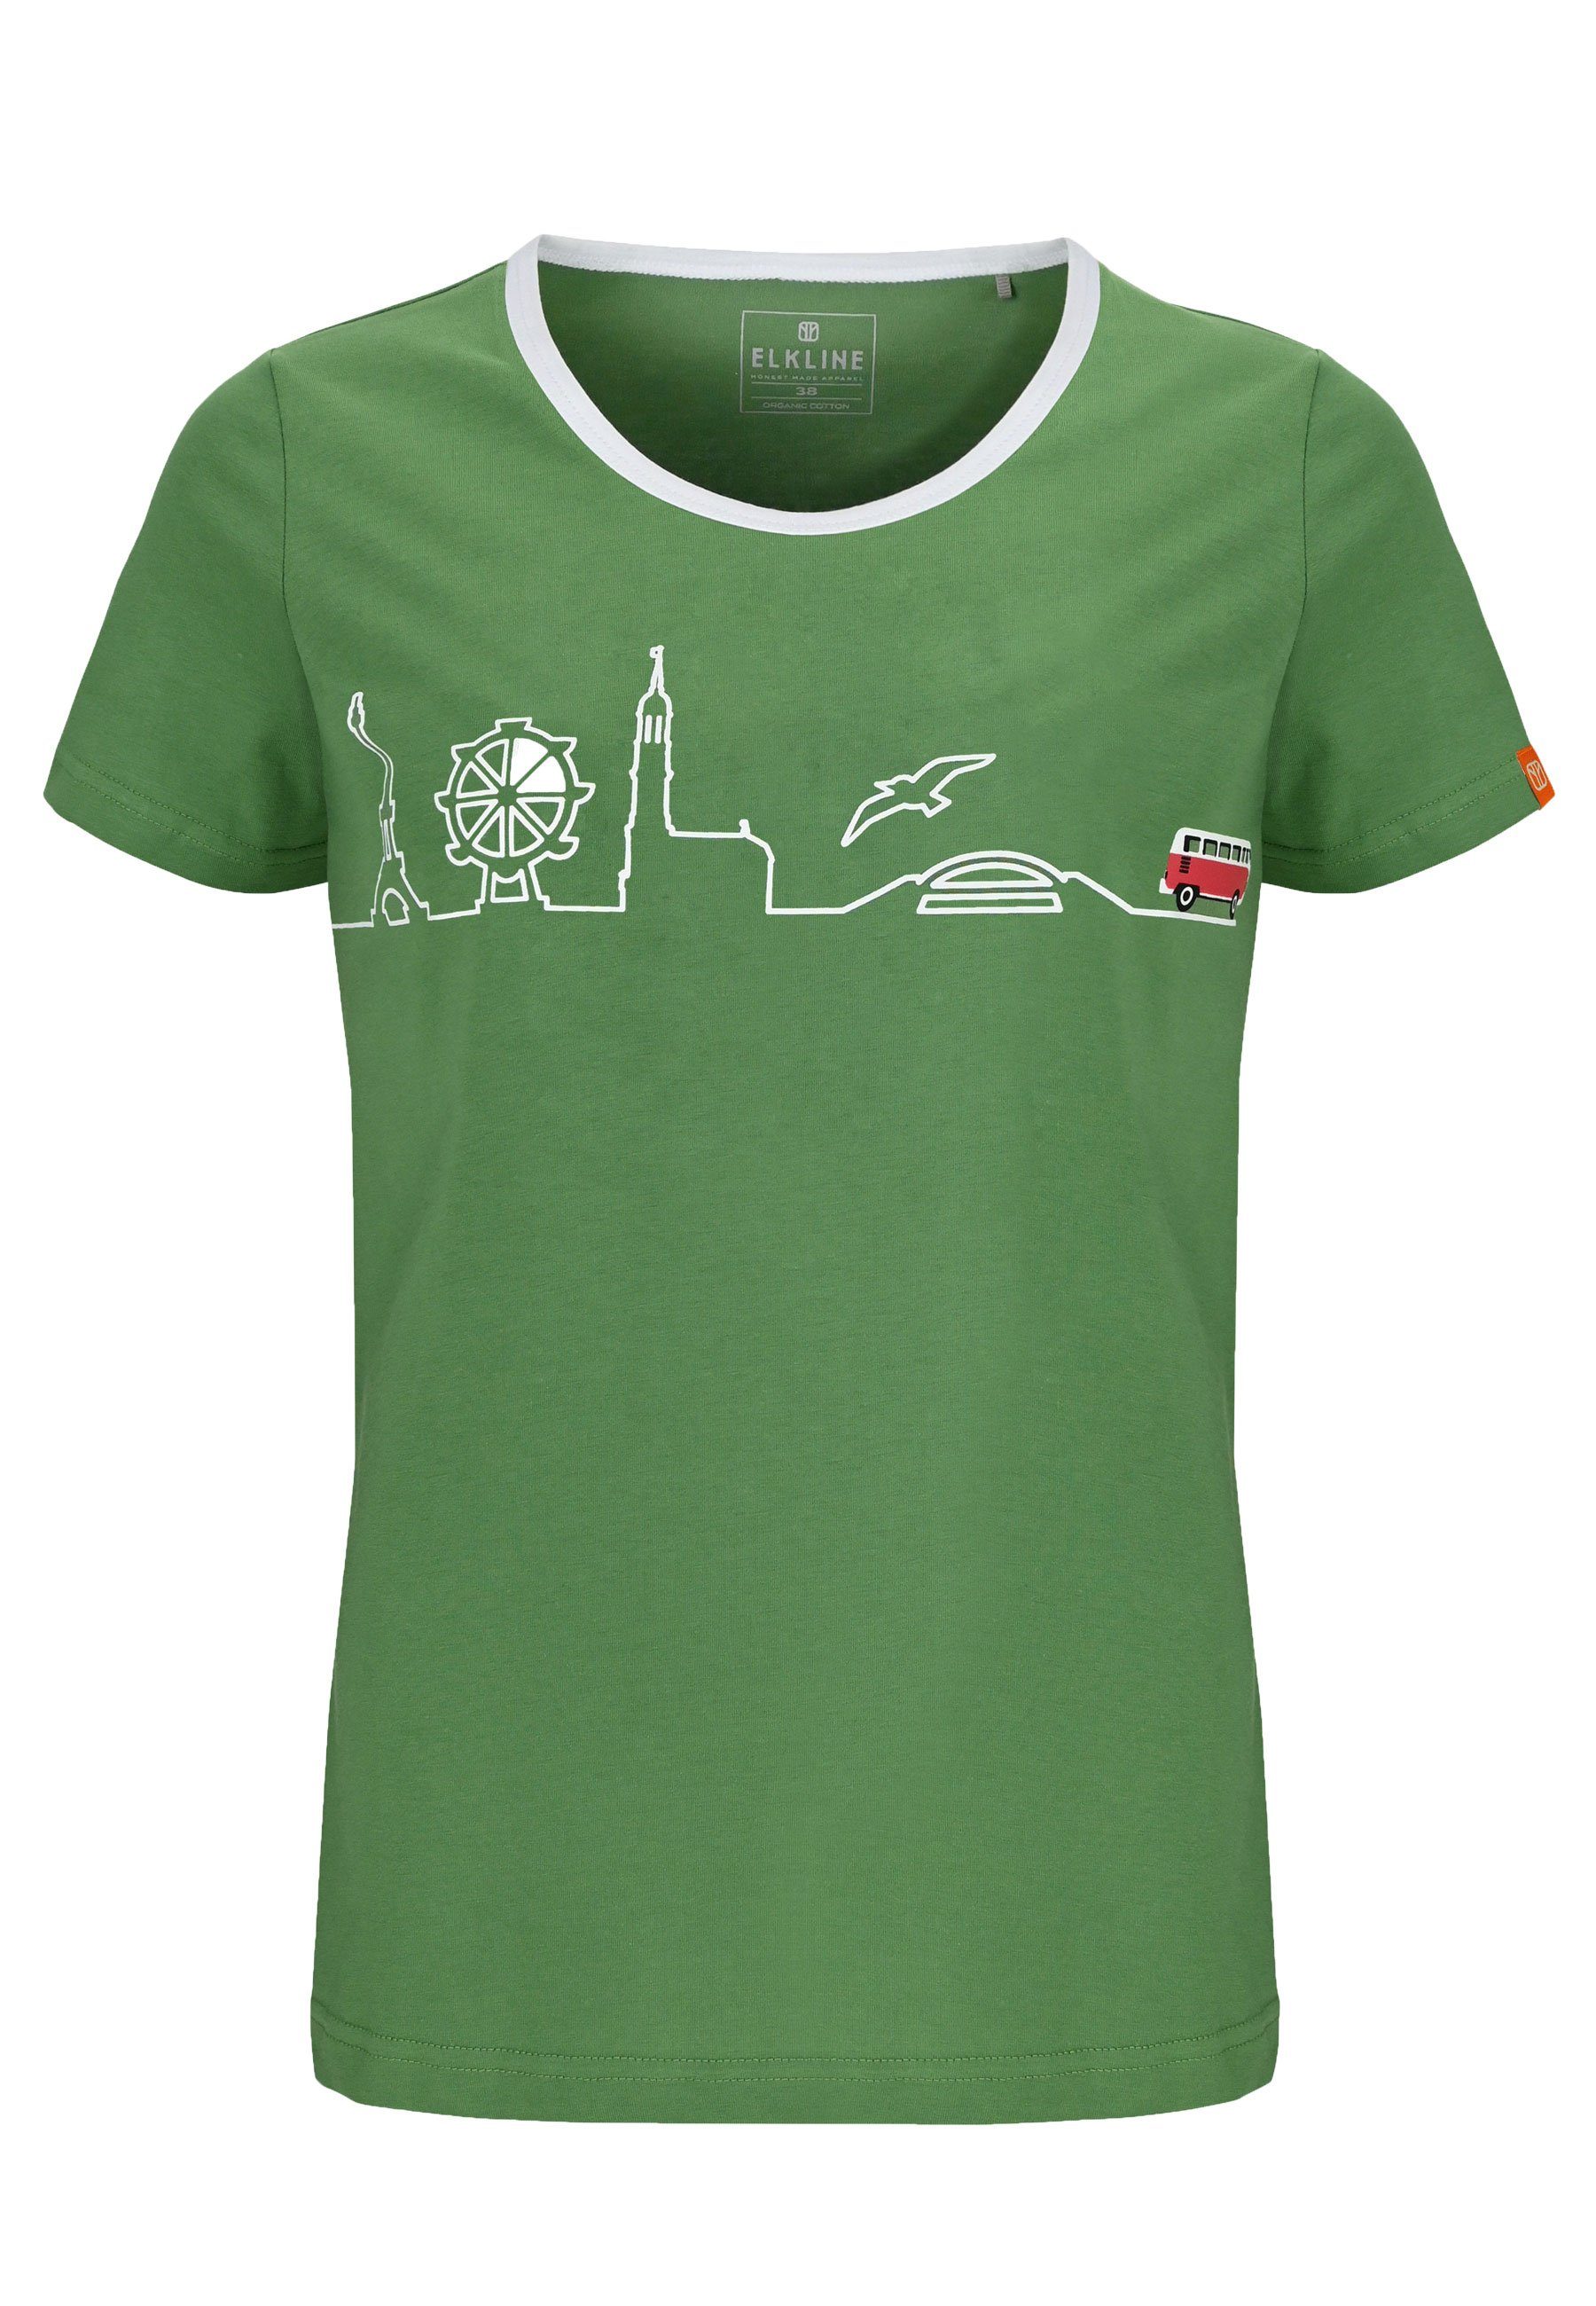 Elkline T-Shirt Little Things VW Bulli Reise Brust und Rücken Print mossgreen